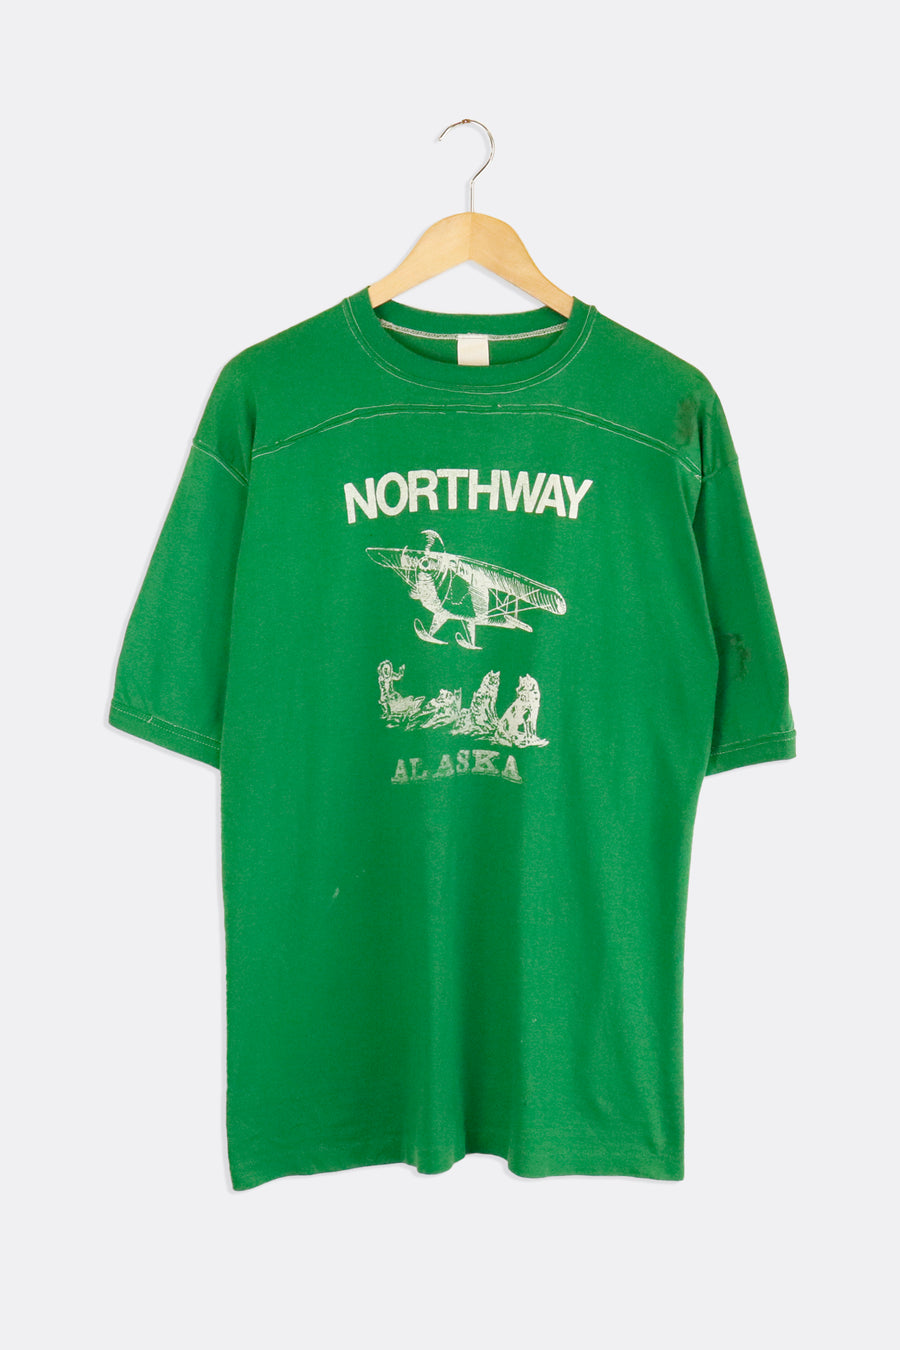 Vintage Northway Alaska Planes Dog Sled Vinyl Graphic T Shirt Sz XL